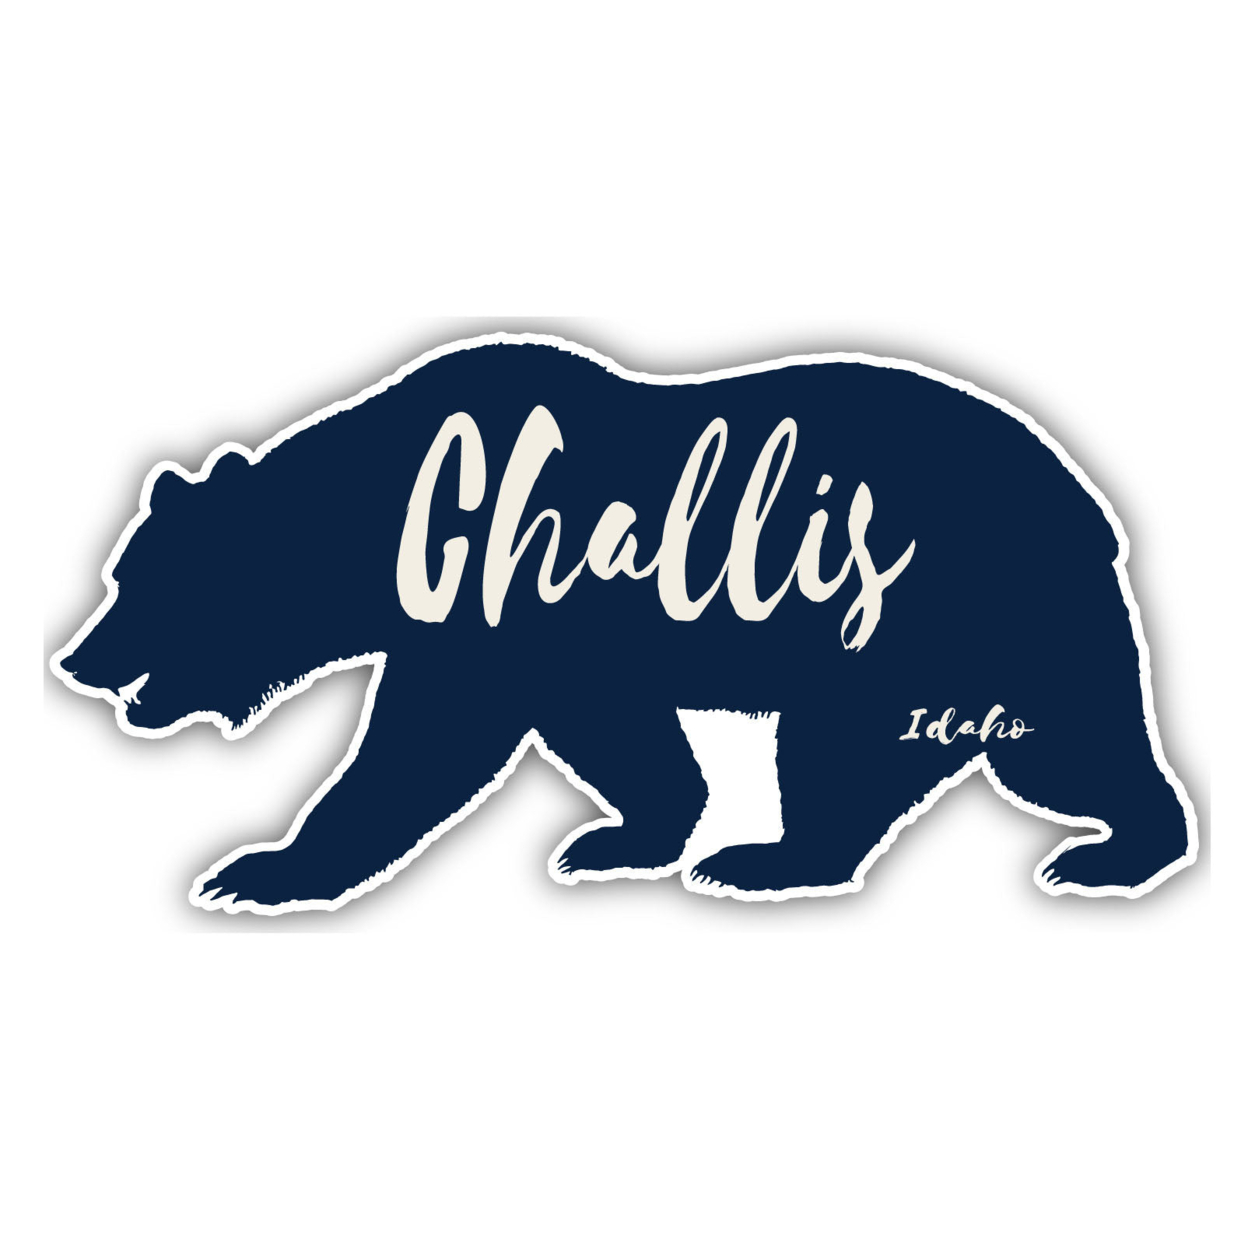 Challis Idaho Souvenir Decorative Stickers (Choose Theme And Size) - 4-Pack, 8-Inch, Bear